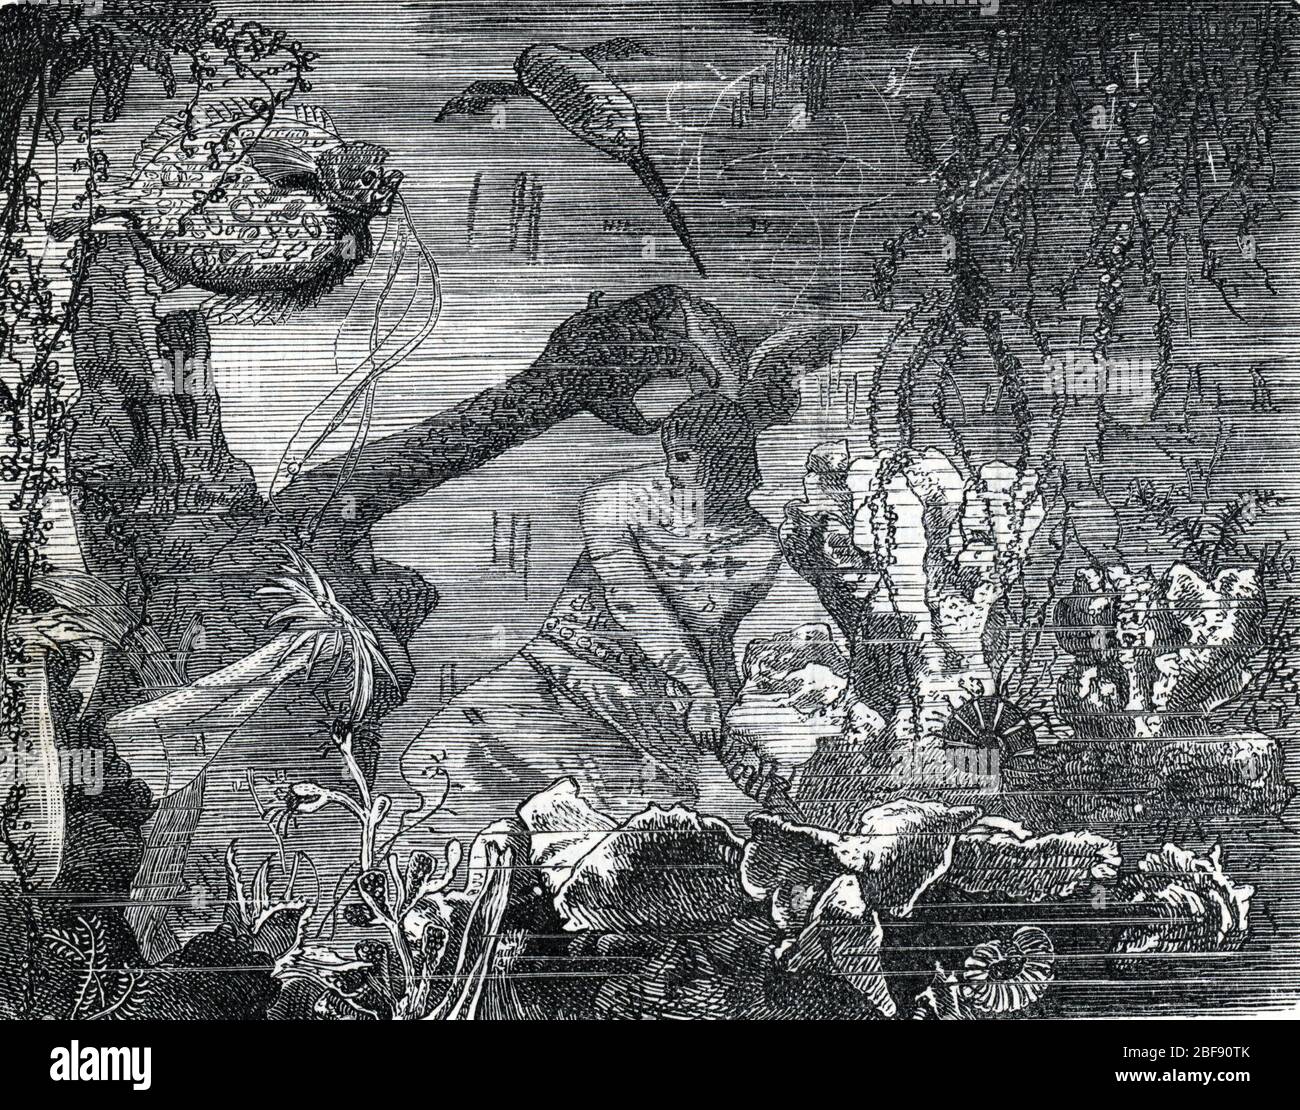 Mythologie nordique : Beowulf combattant la Mere de Grendel dans le lac (Mitología nórdica : Beowulf durante la Segunda batalla: La Madre de Grendel) Gravure Foto de stock